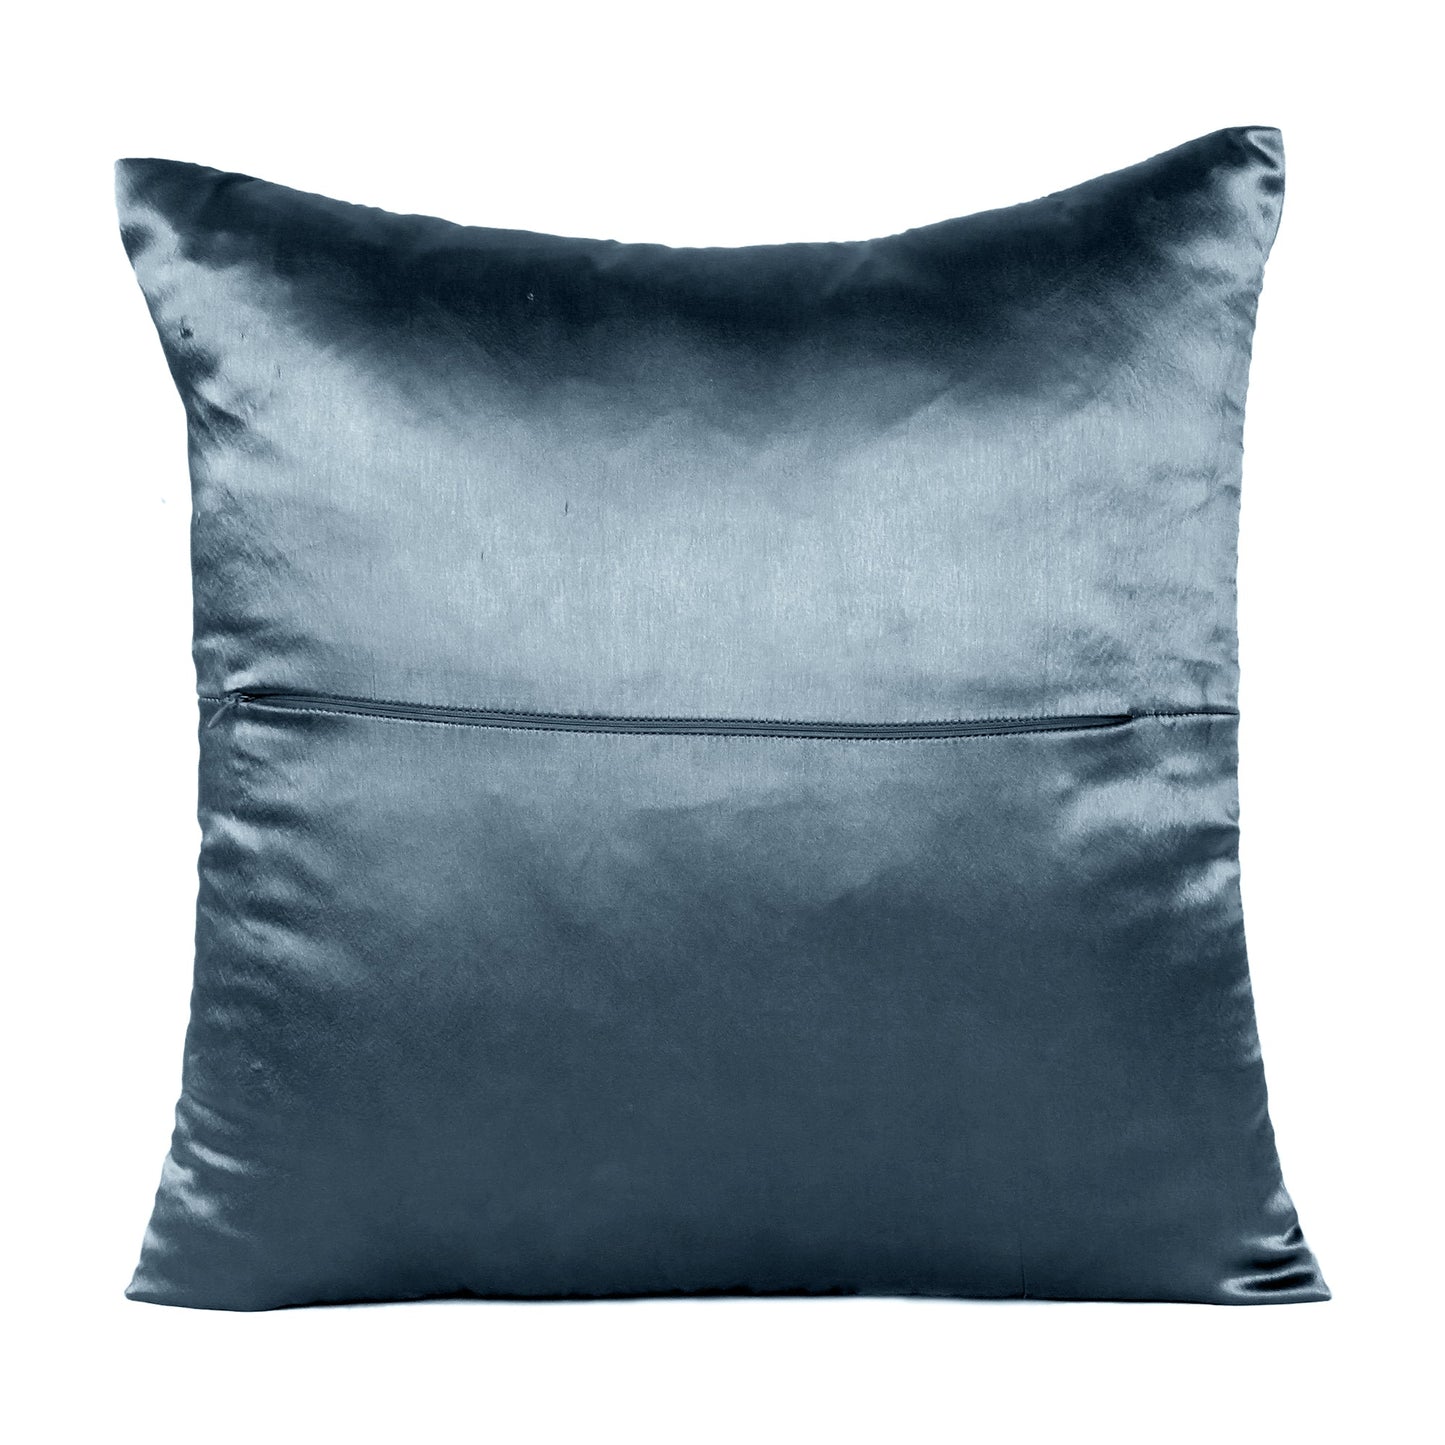 Luxury Soft Plain Satin Silk Cushion Cover in Set of 2 - Castlerock gray